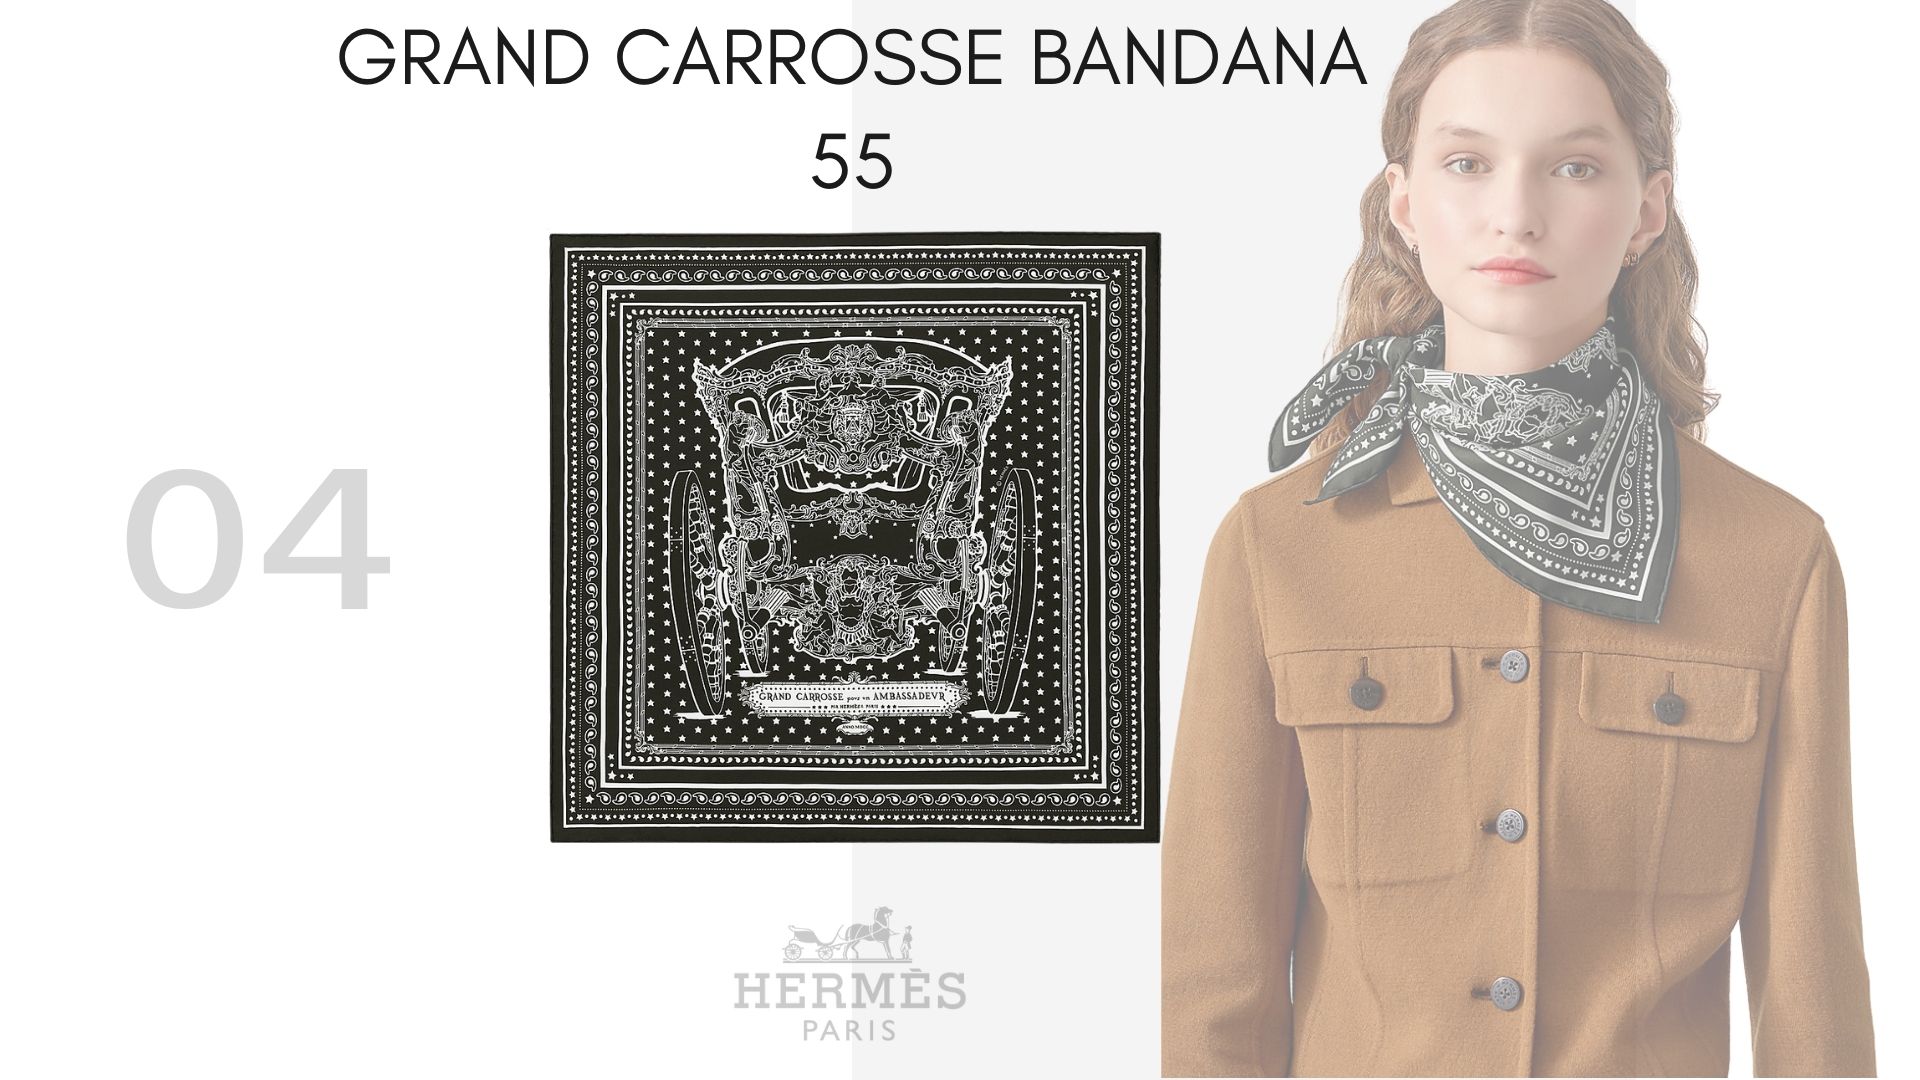 Grand Carrosse bandana 55